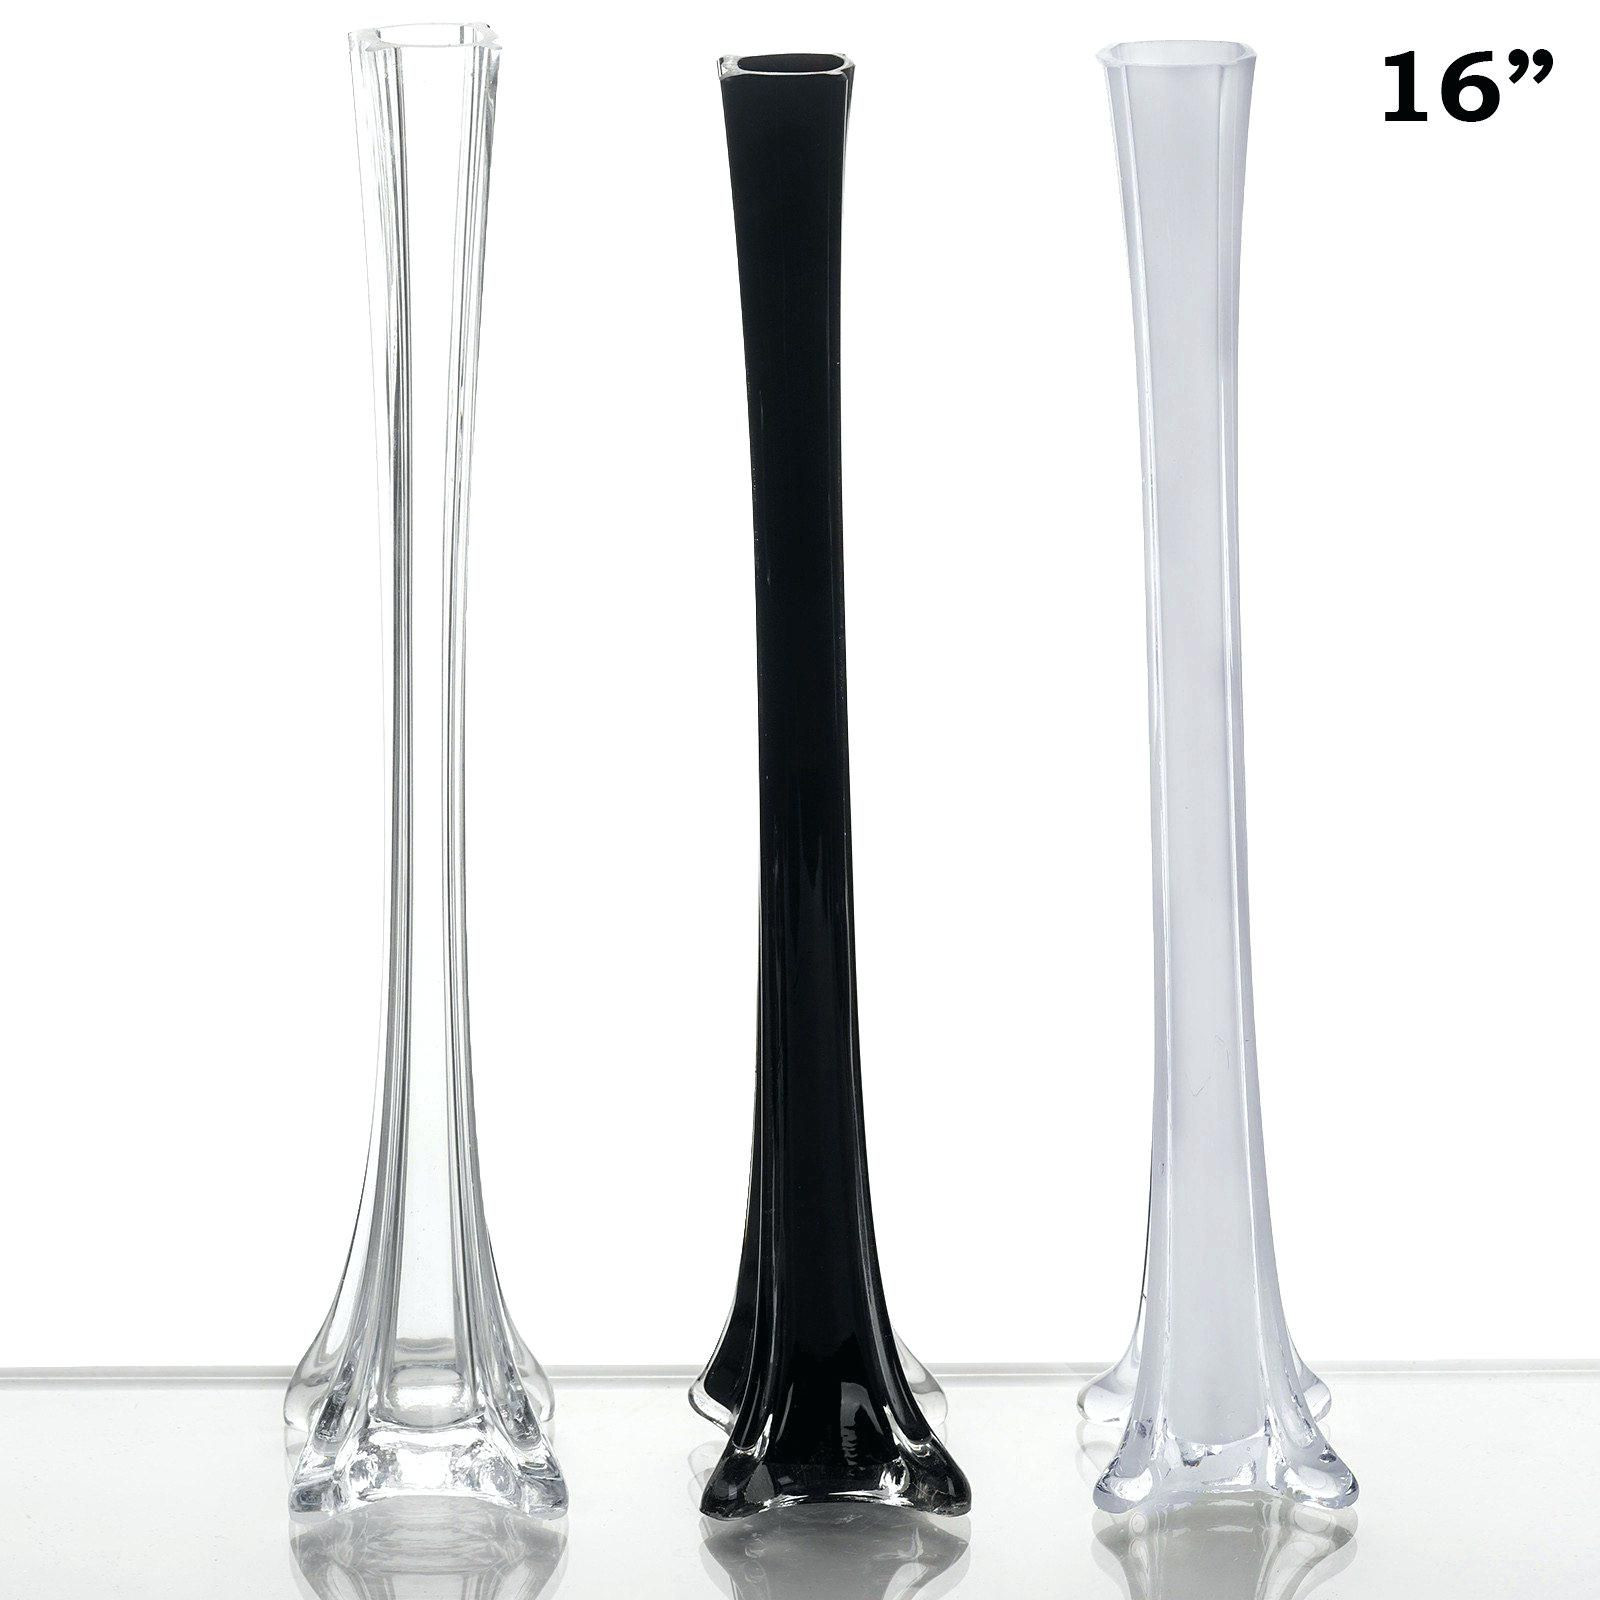 3 glass vases of 40 glass vases bulk the weekly world regarding gallery plastic eiffel tower vases wholesale drawings art gallery